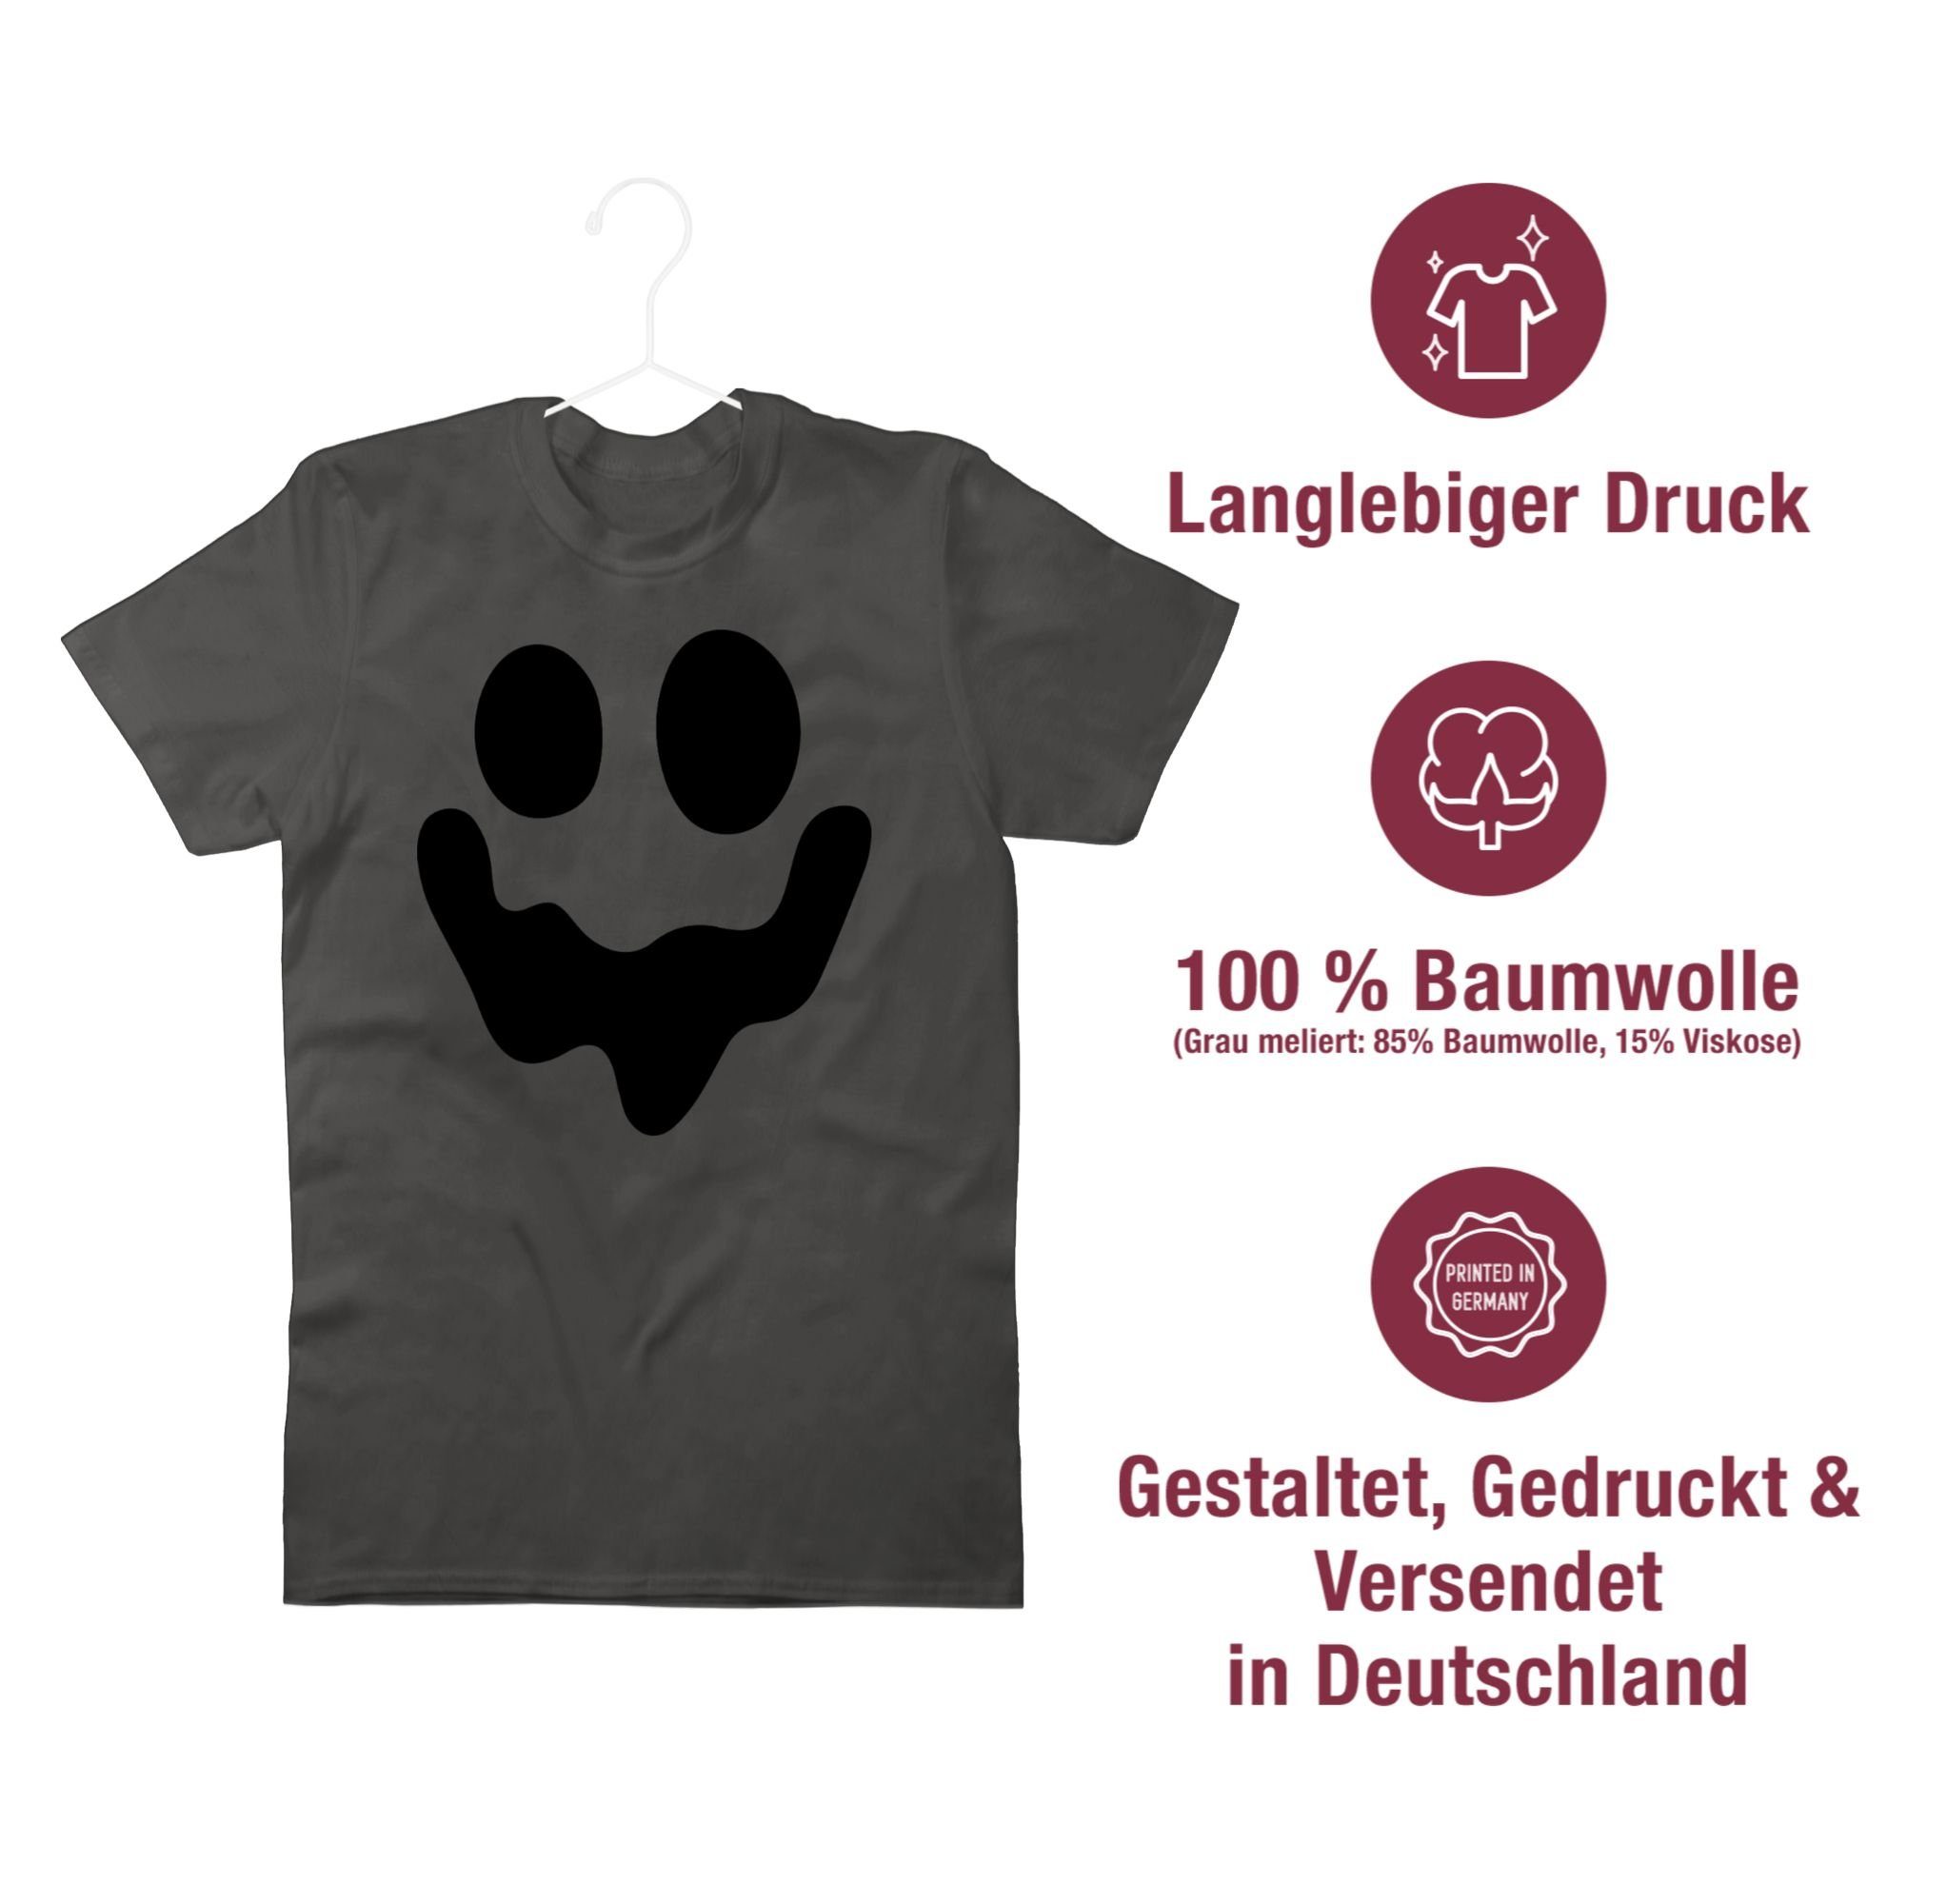 Gruselig Halloween Kostüme T-Shirt Herren Dunkelgrau Gespenst Shirtracer Spuk 02 Geist Einfach